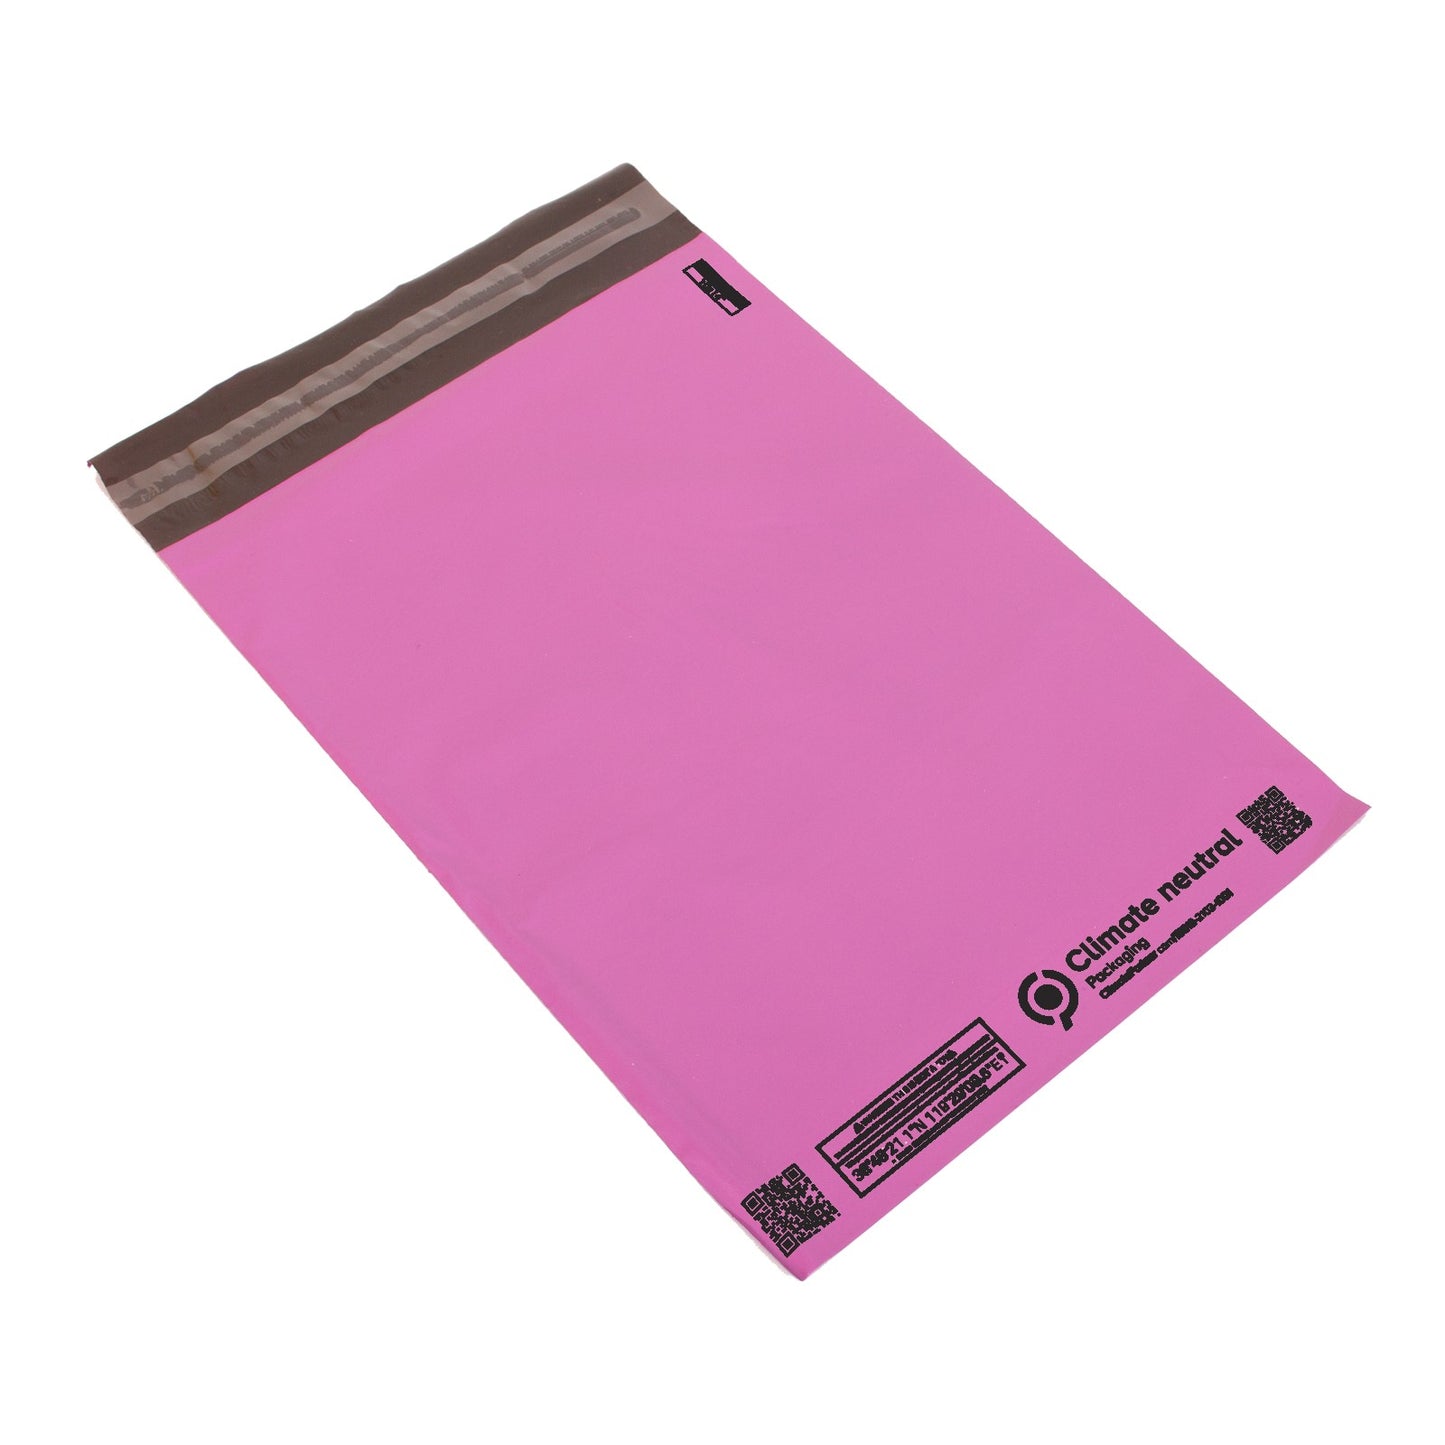 Full-back image of 15 x18 pink sustainable Mailing Bag